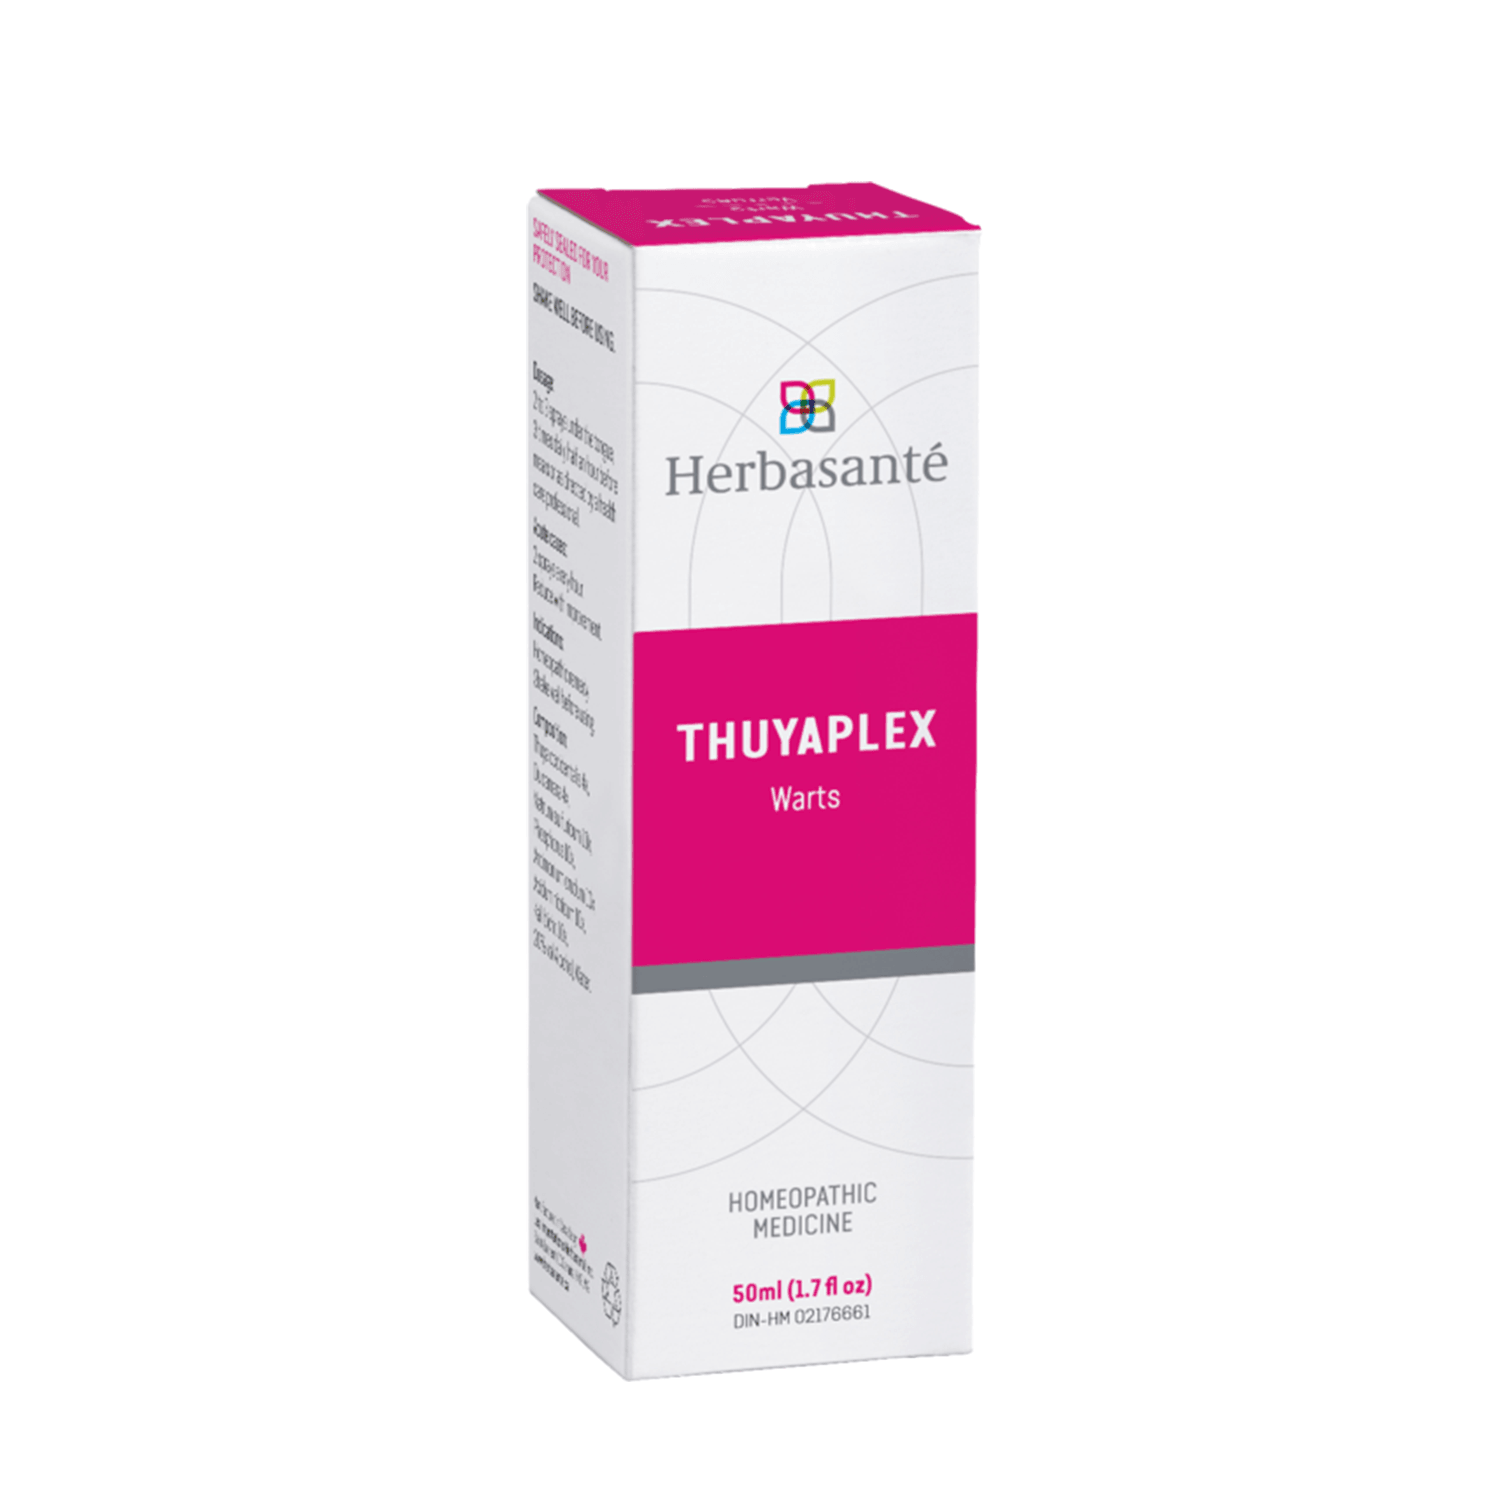 Herbasante Thuyaplex Warts 50ML Homeopathic at Village Vitamin Store